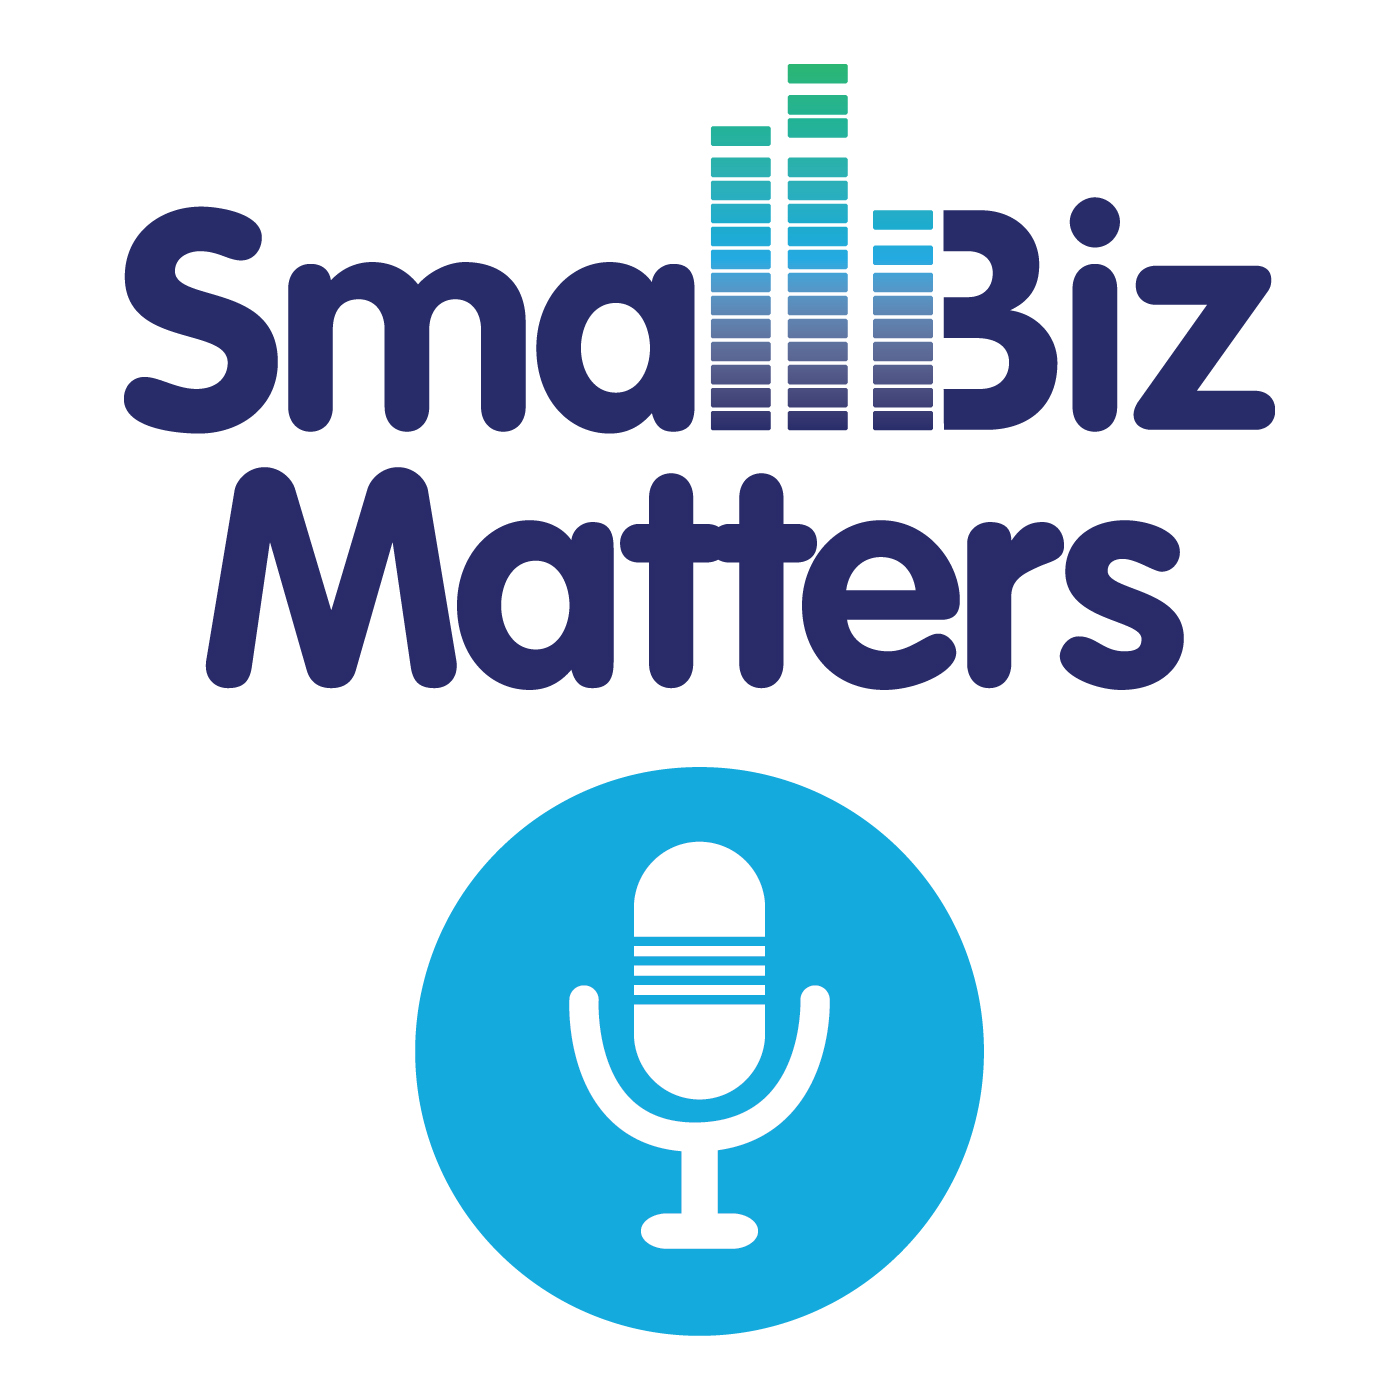 Small Biz Matters: People, Policy, Purpose.